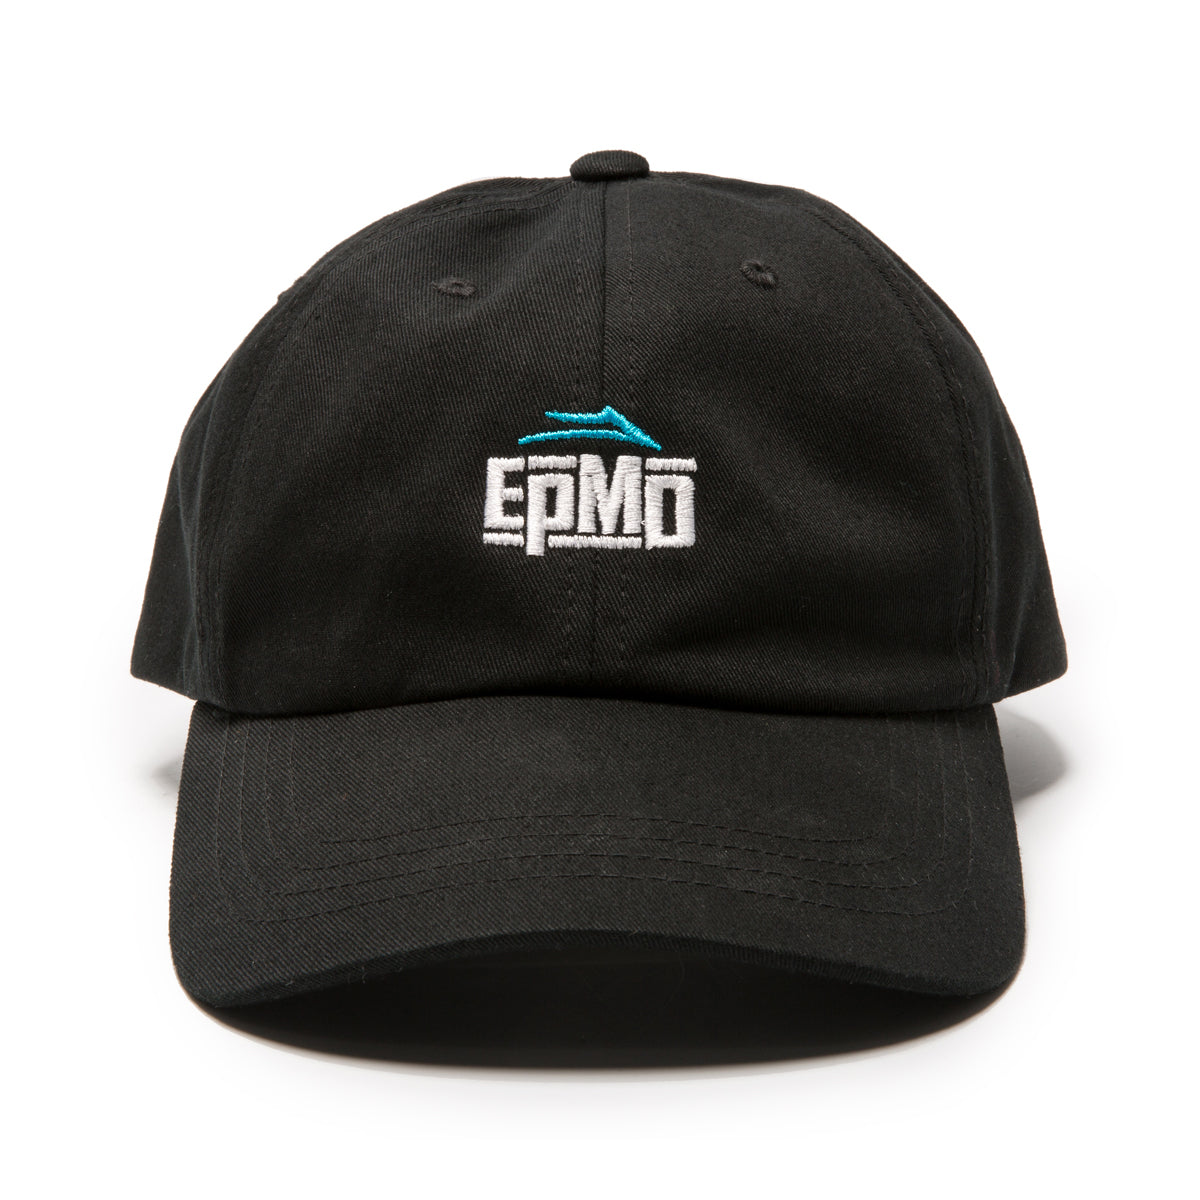 Epmd Dad Hat - Mens Hats \u0026 Accessories 